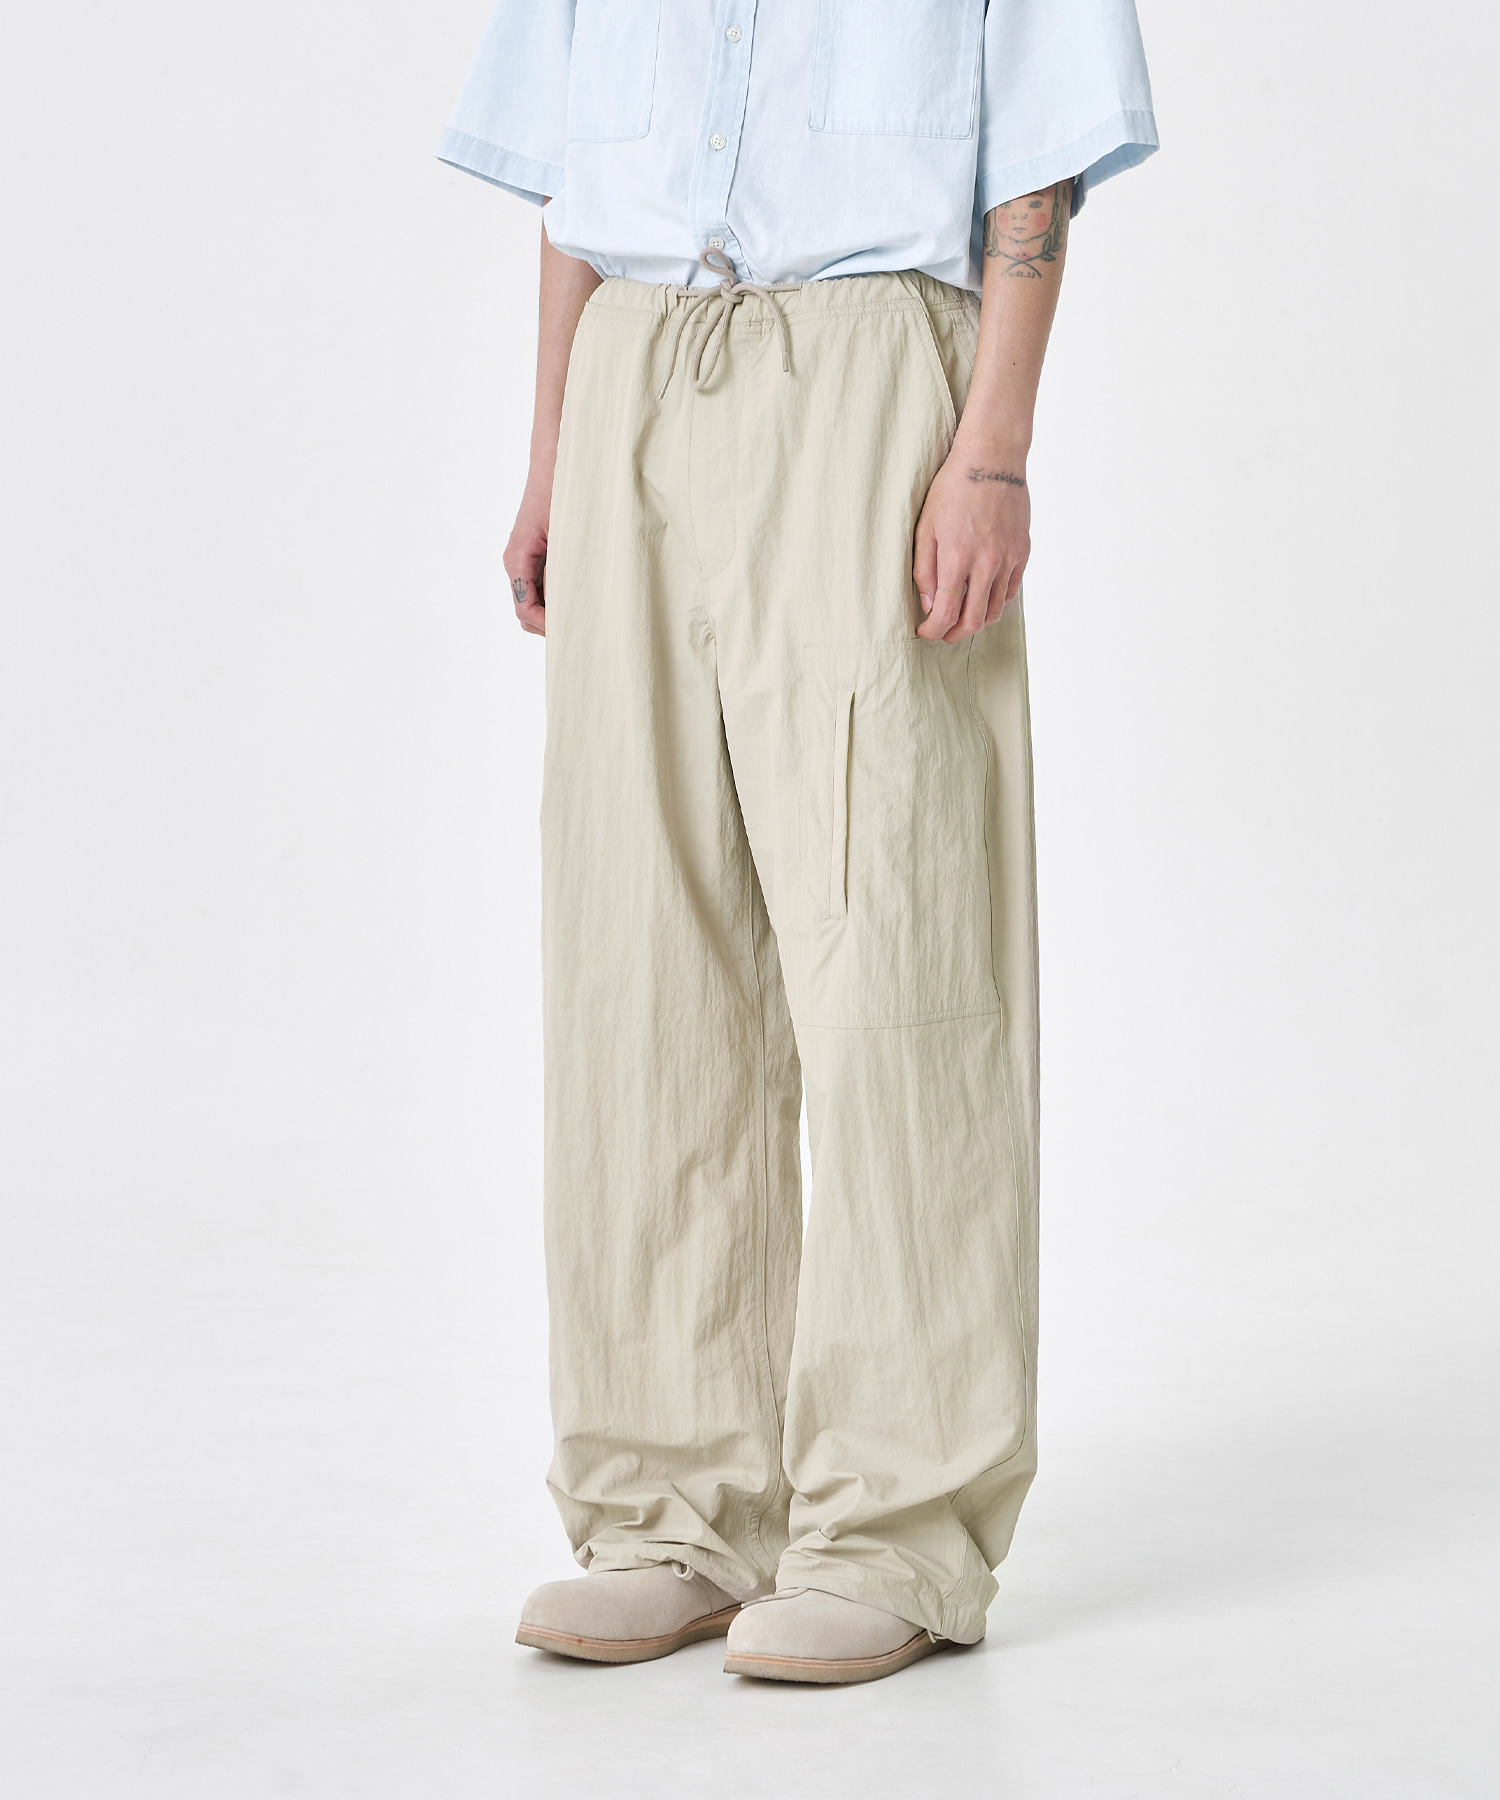 NOUN노운 utility pants (light beige)